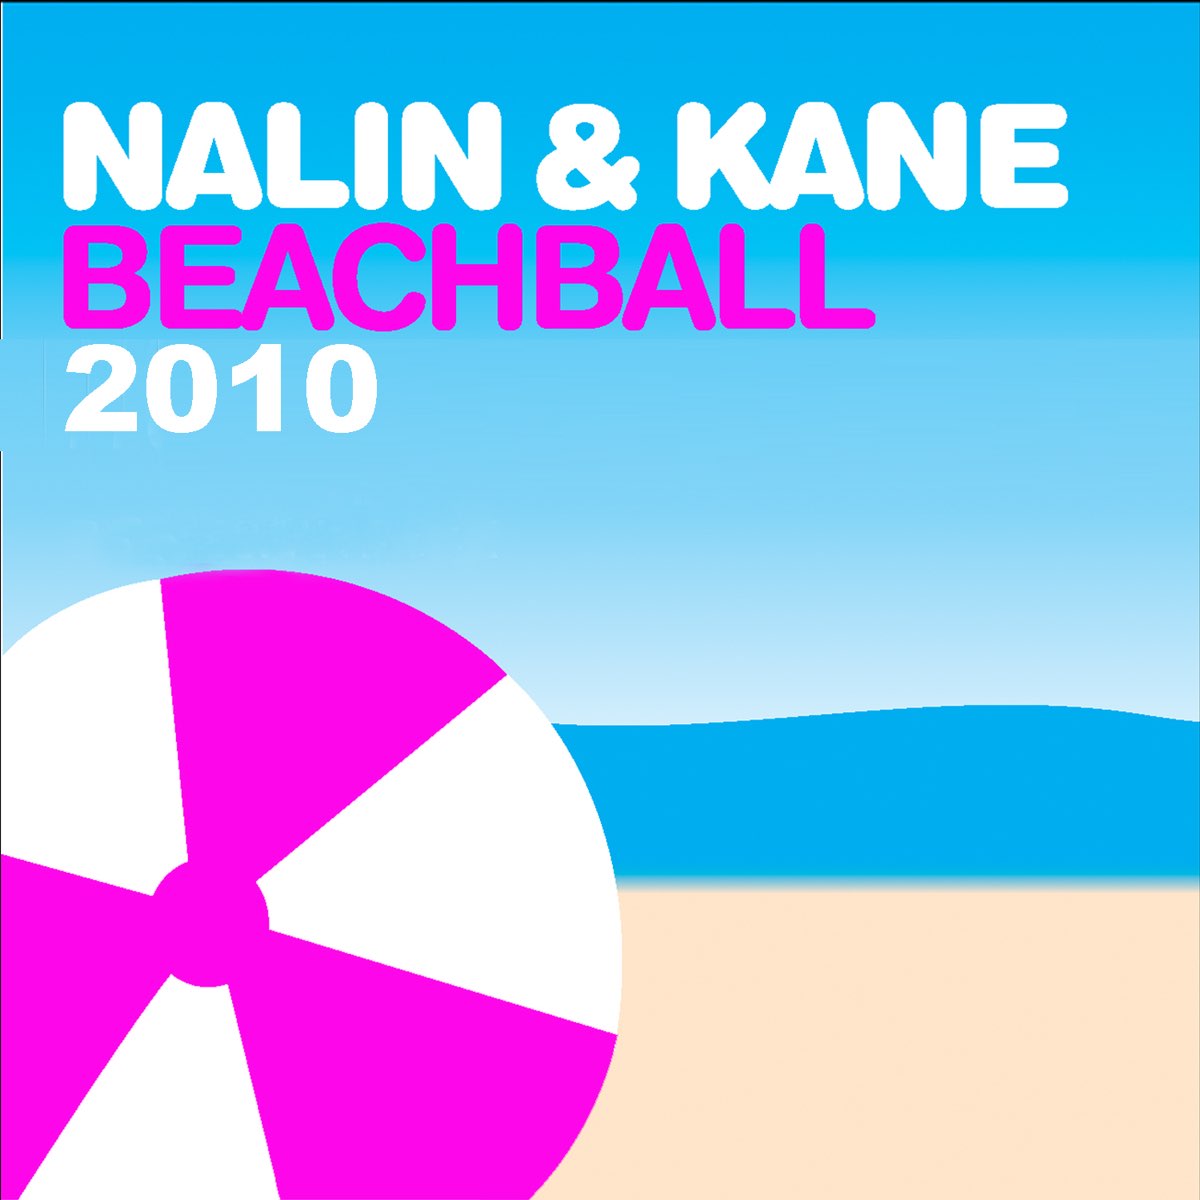 Beachball by Nalin & Kane.